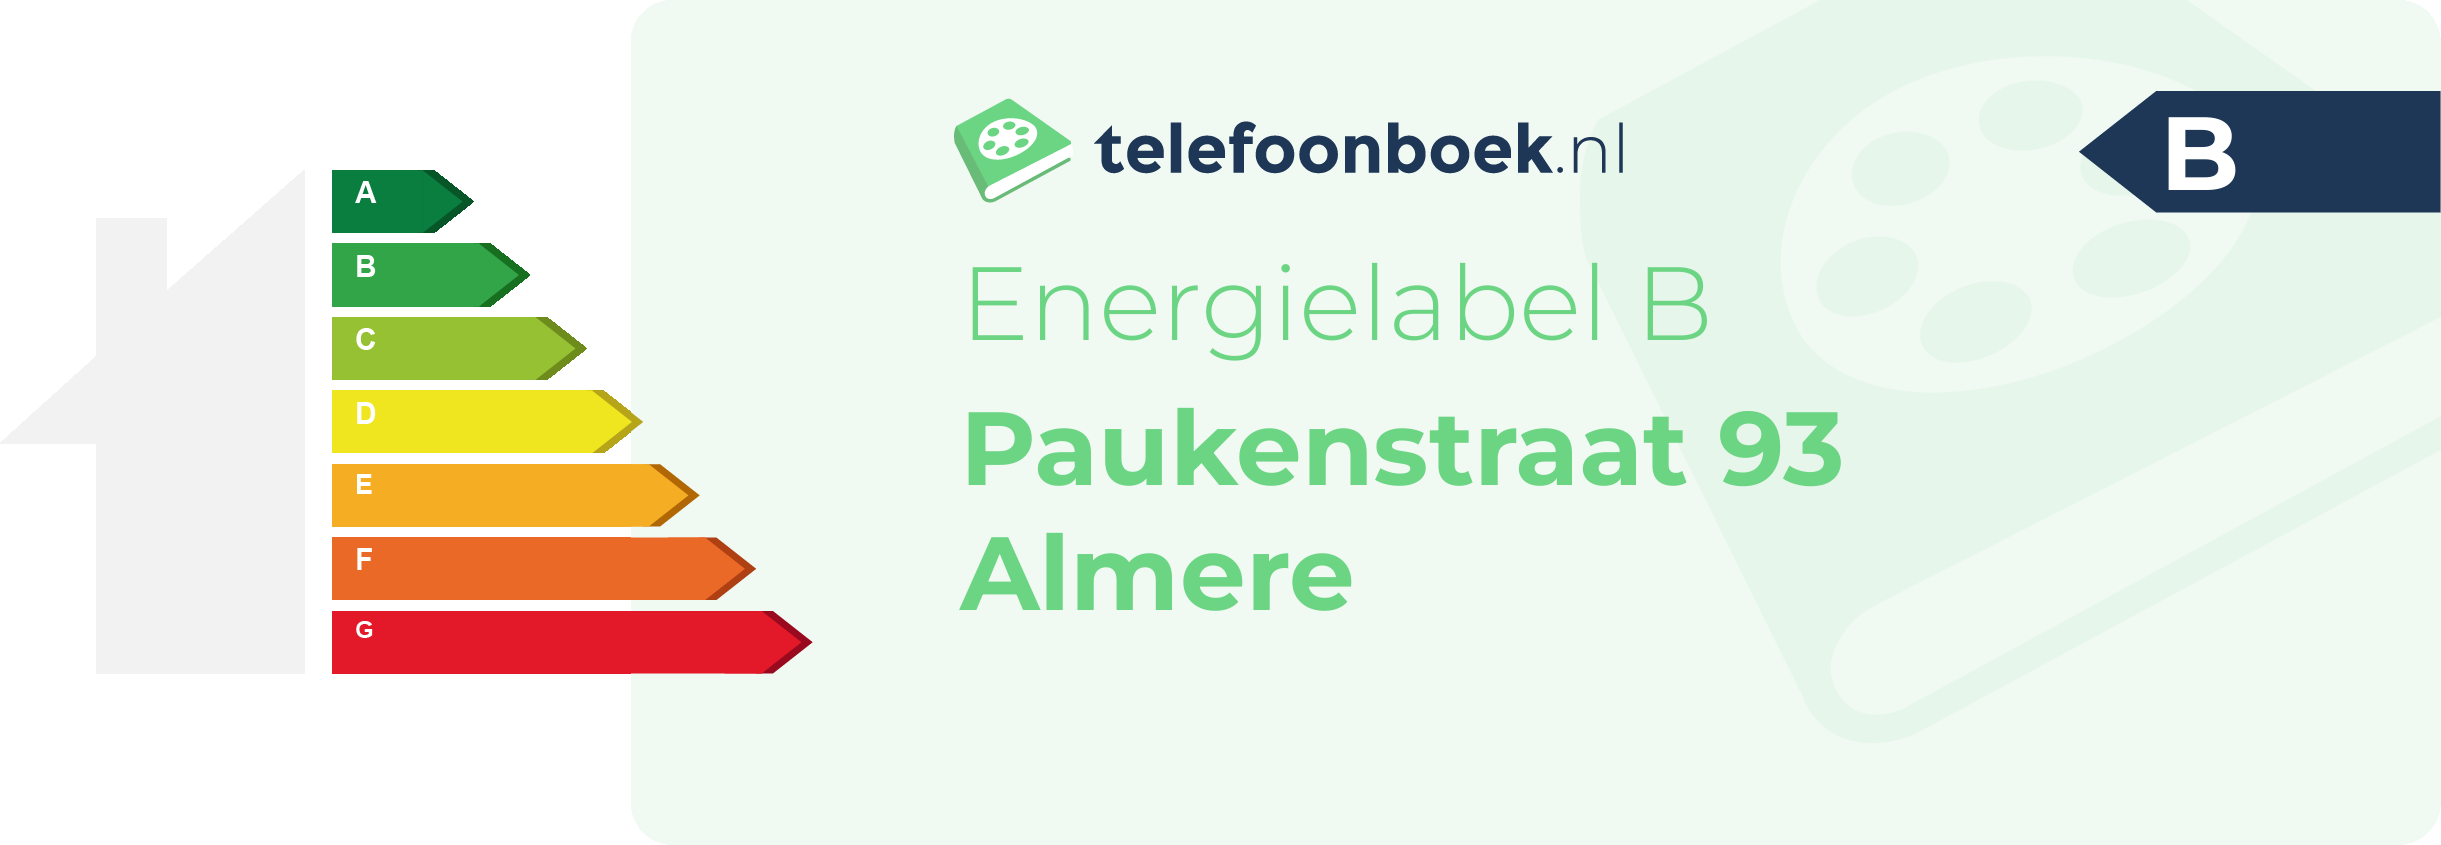 Energielabel Paukenstraat 93 Almere